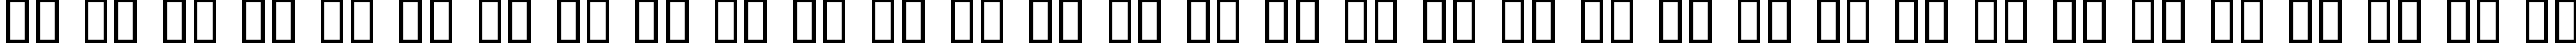 Пример написания русского алфавита шрифтом Wonton by Da Font Mafia